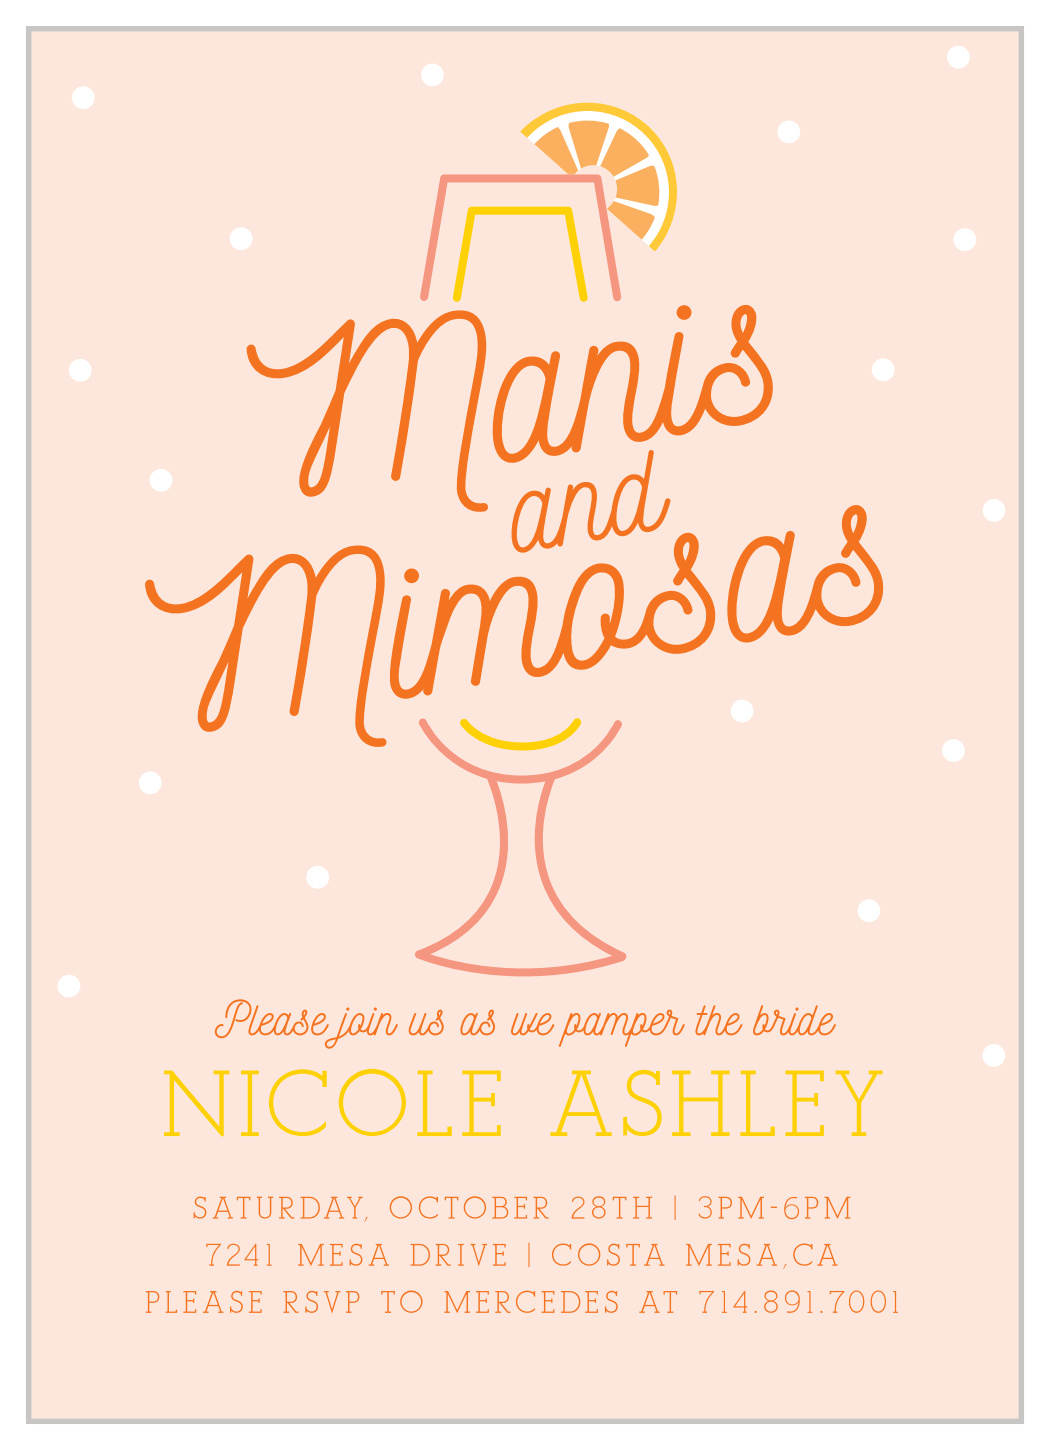 Manis & Mimosas Bridal Shower Invitations by Basic Invites